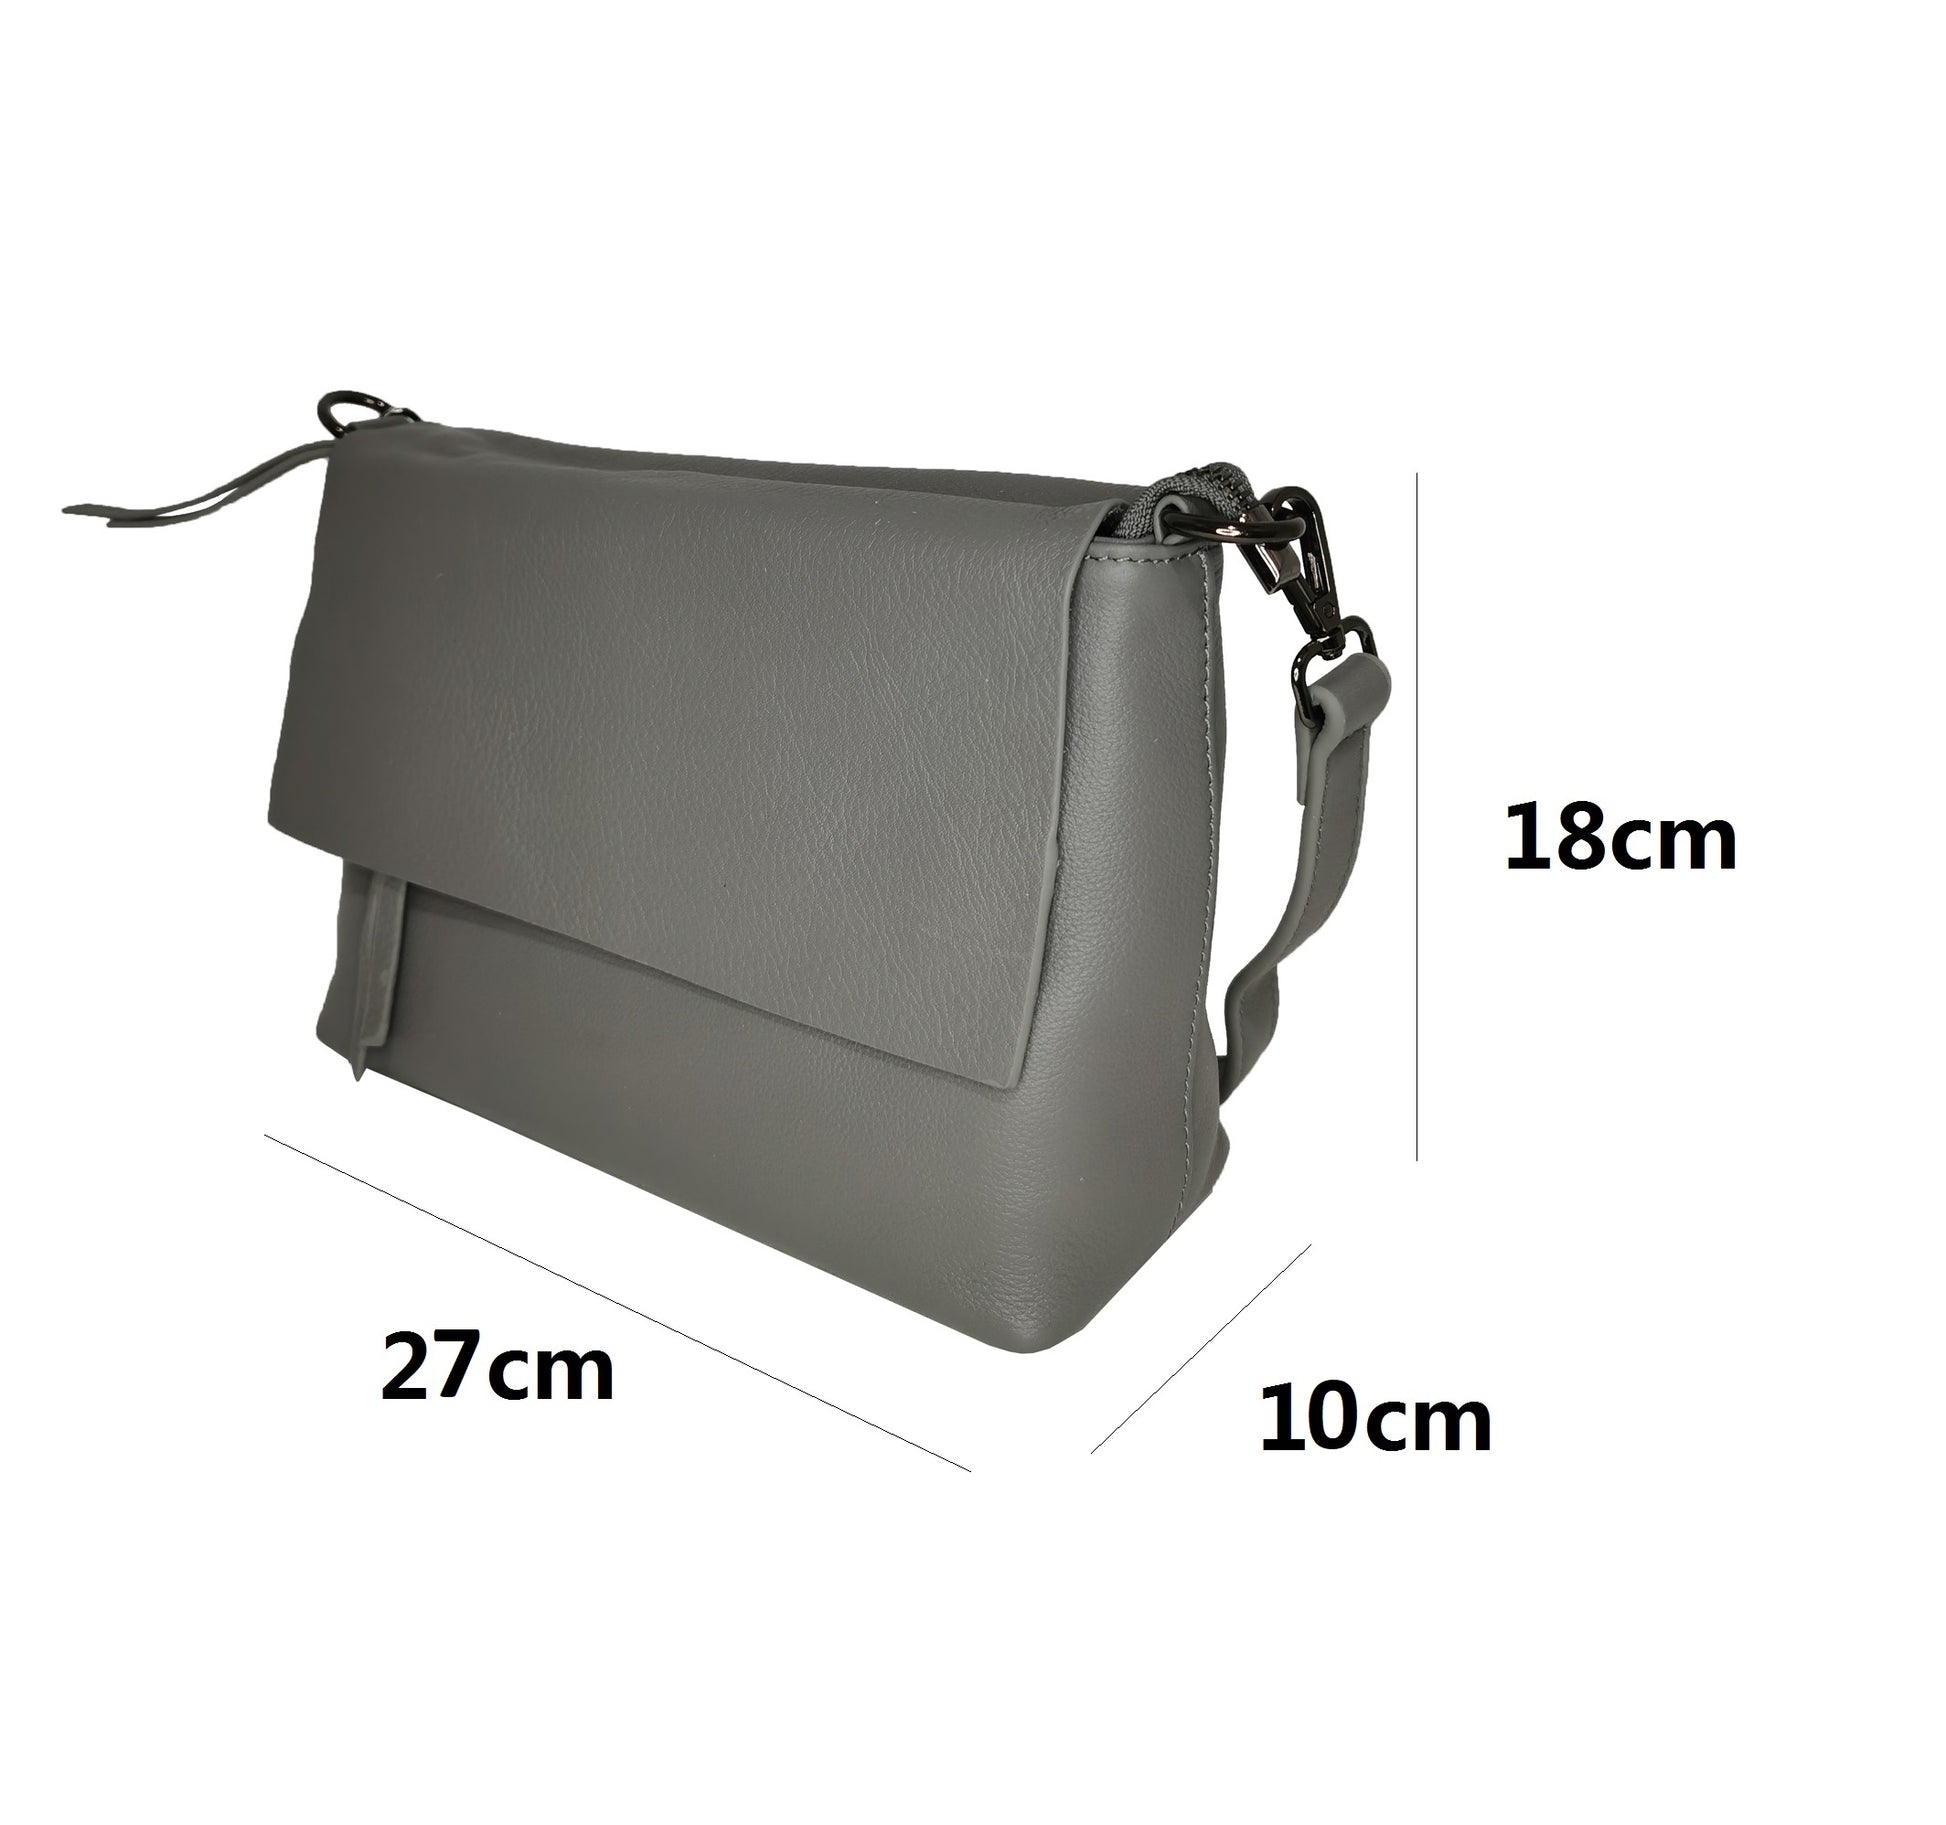 Women's genuine cowhide leather messenger satchel bag handbag Boite design by Tomorrow Closet